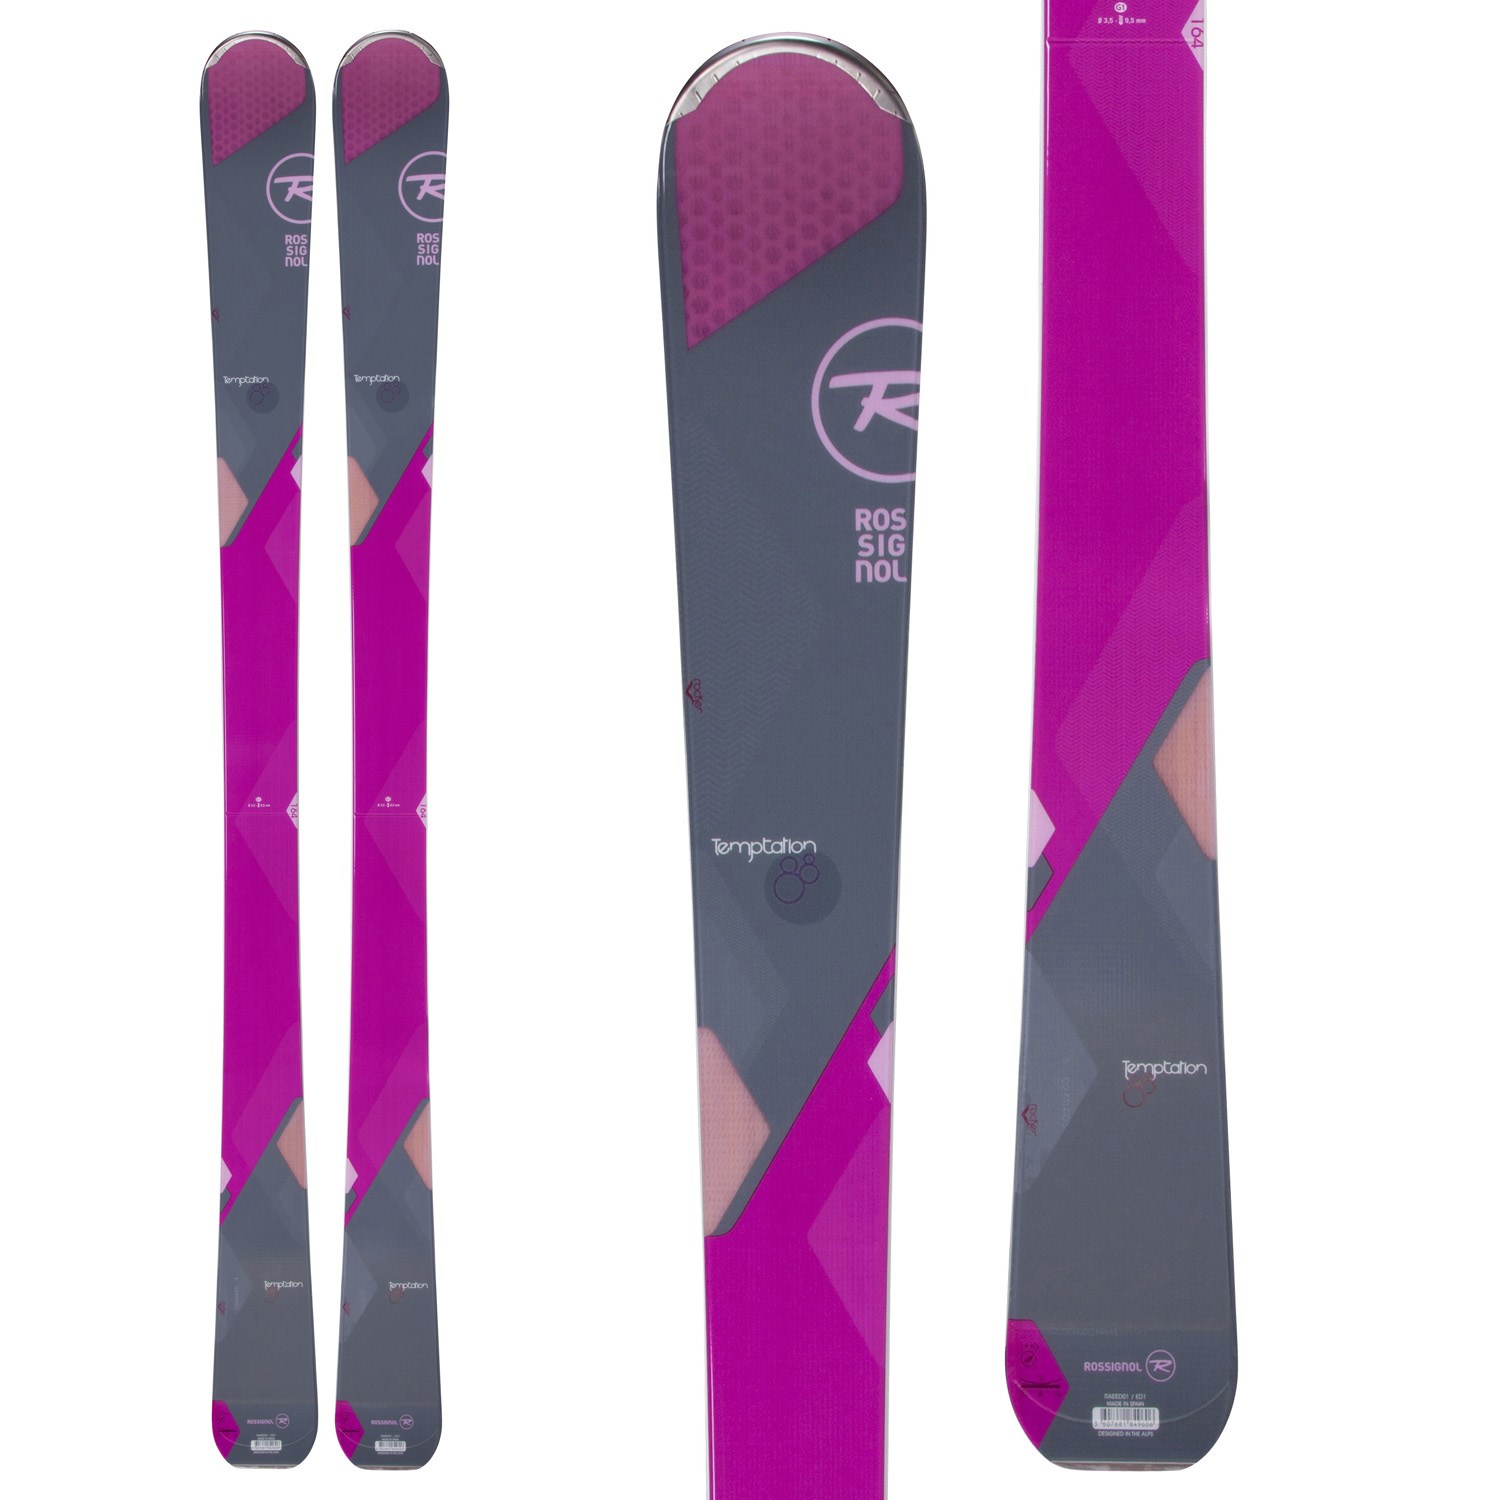 Rossignol Temptation 88 Skis - Women's 2017 | evo